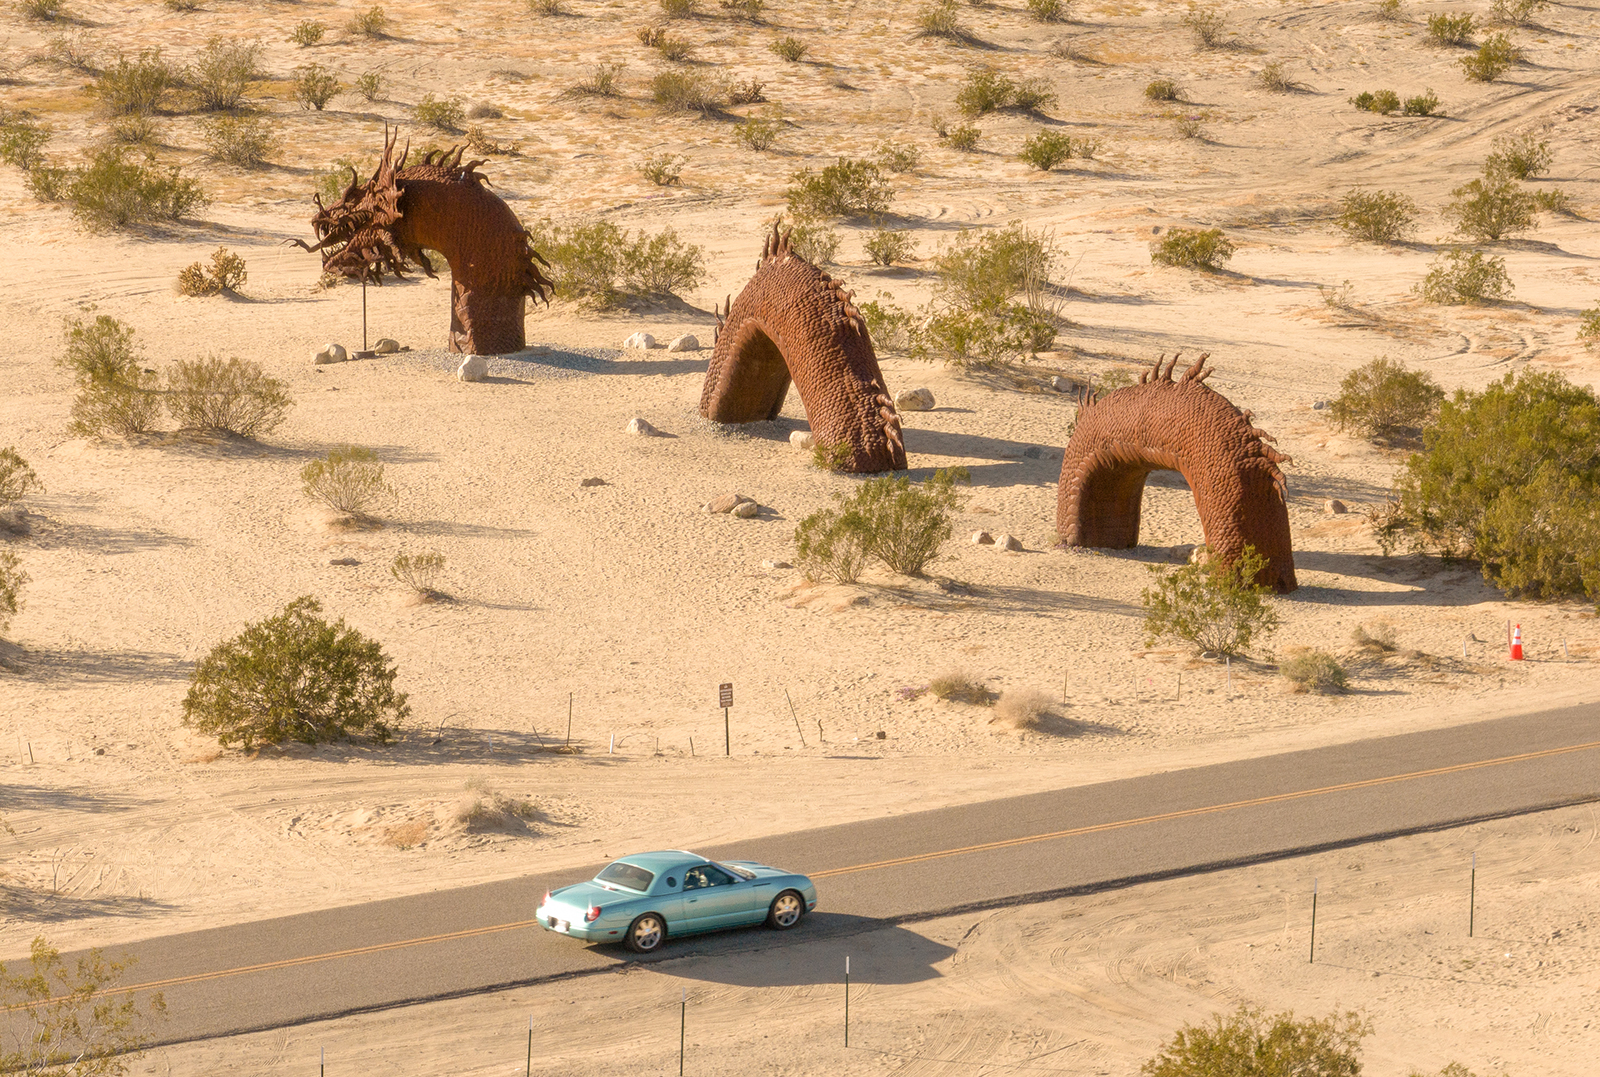 The Borrego Springs serpent sculpture rises from the desert floor at Galleta Meadows.